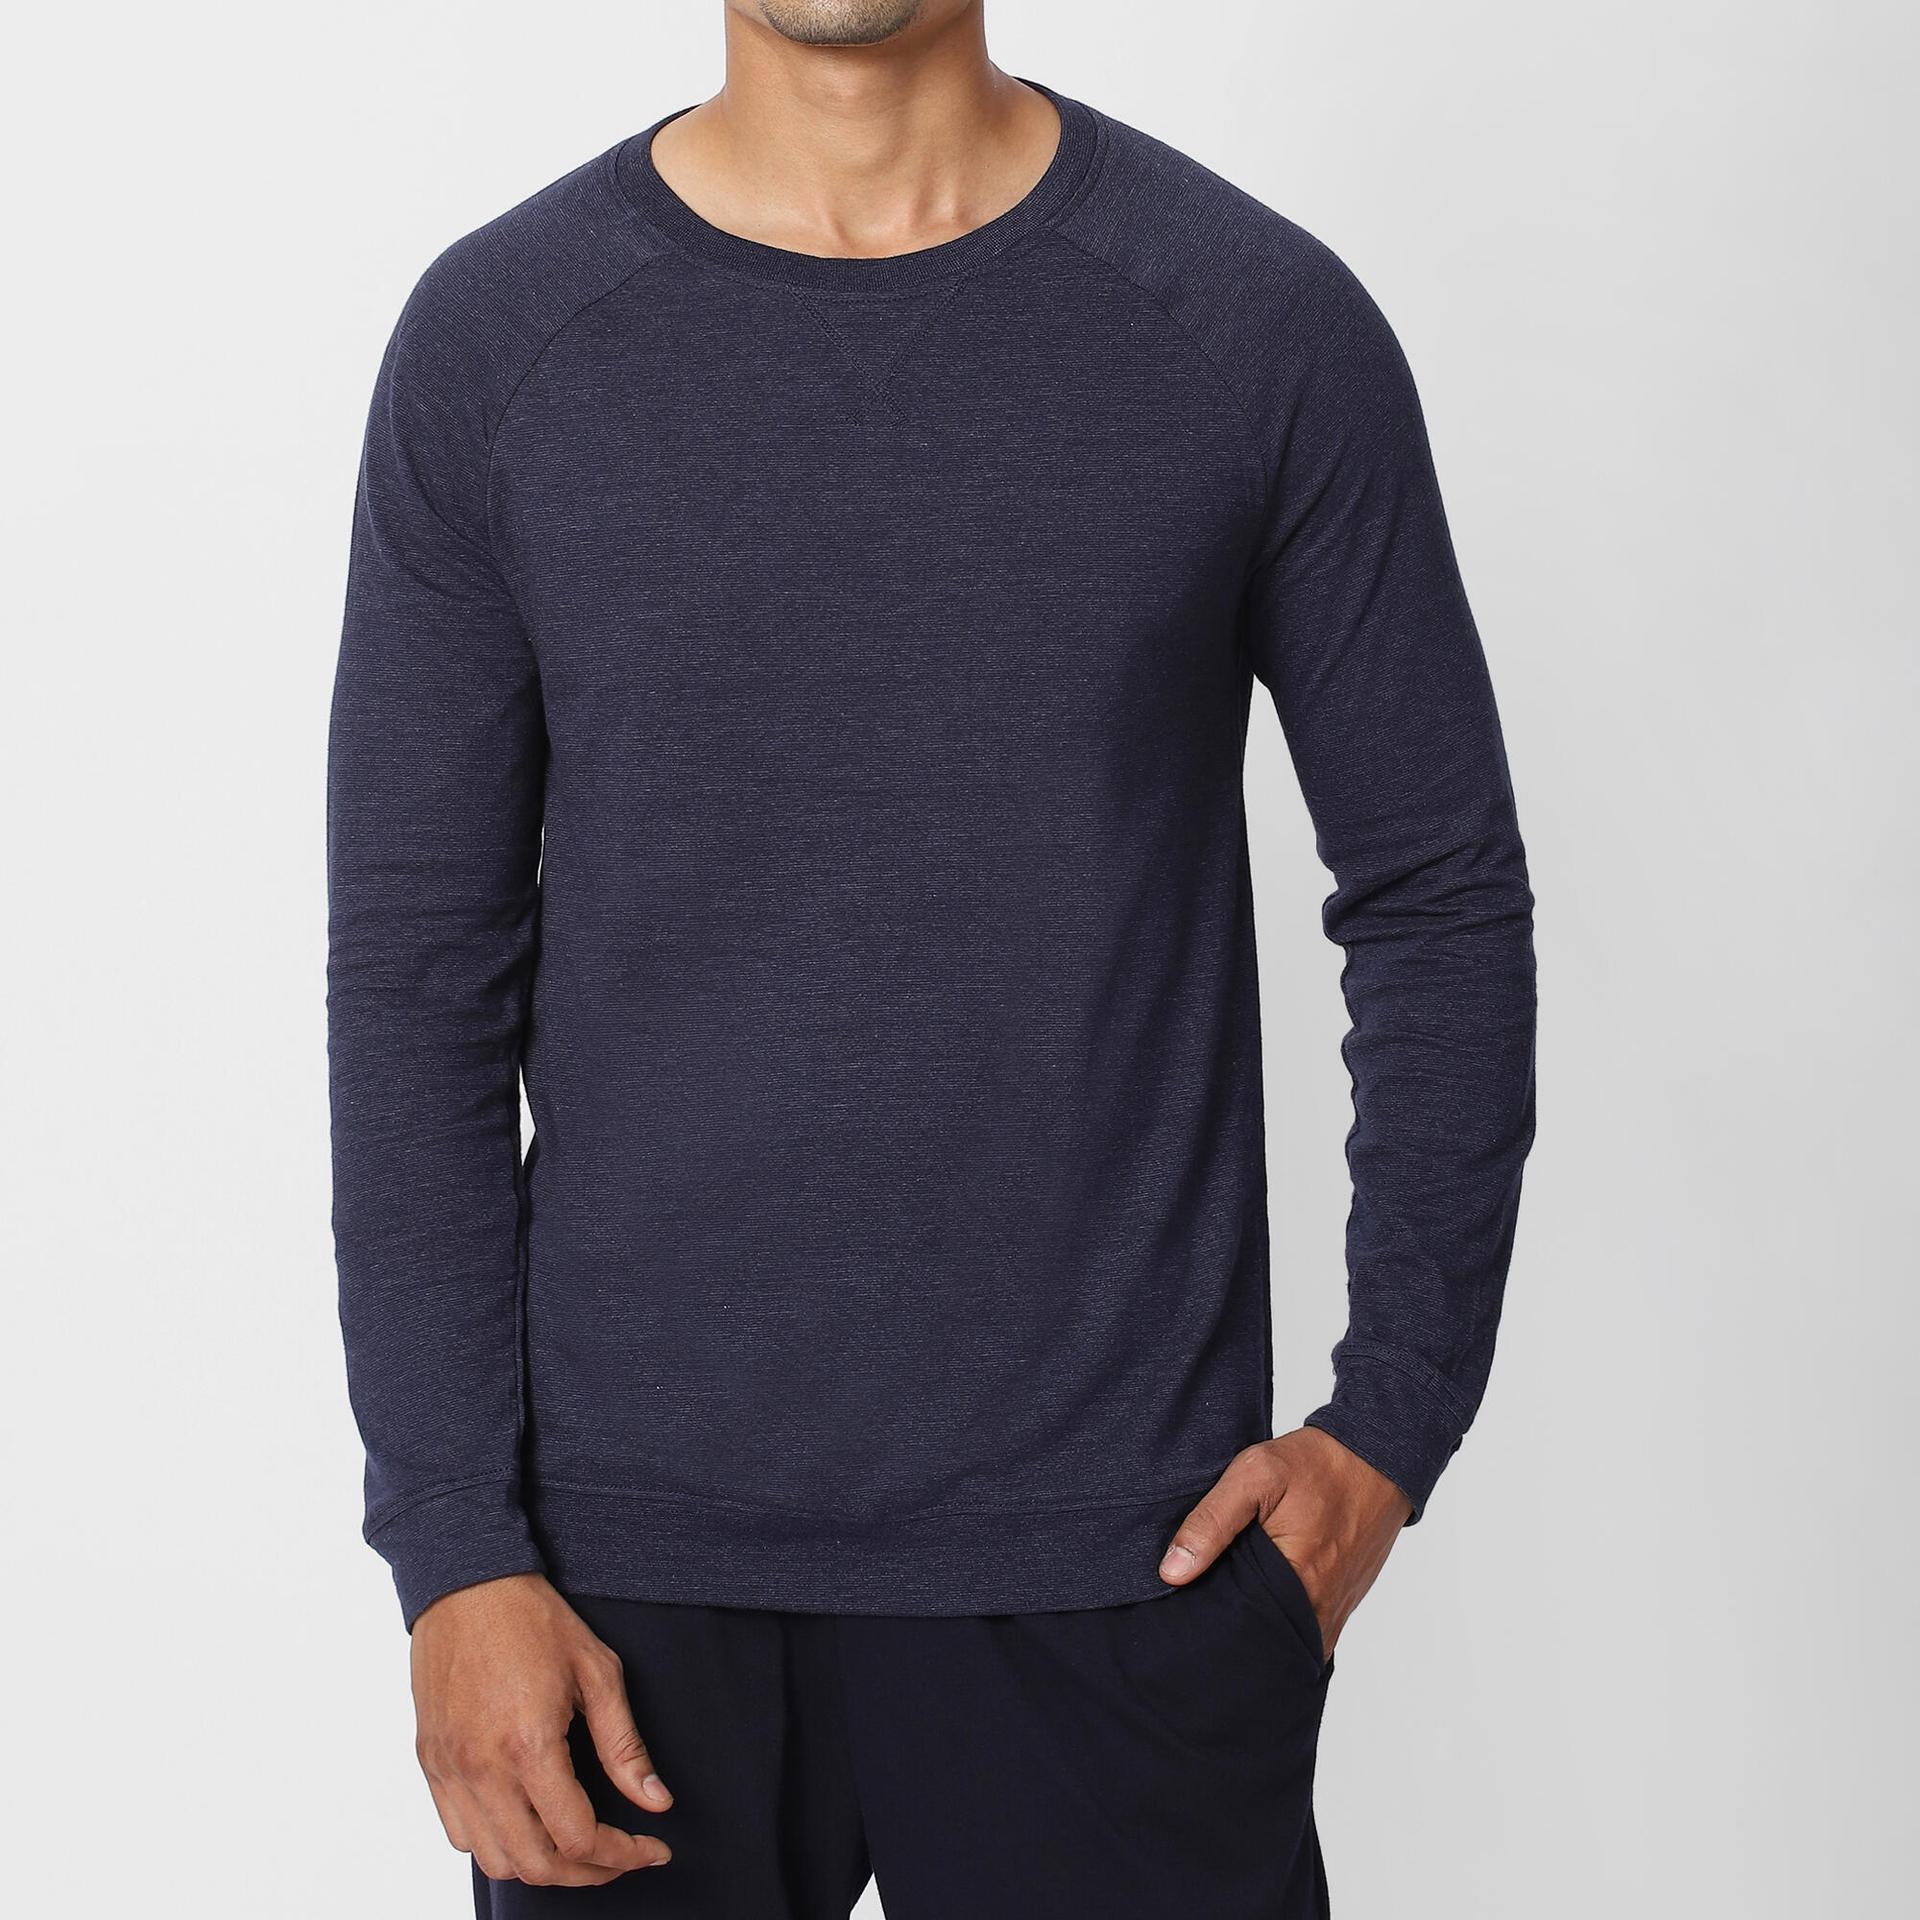 men's-cotton-gym-sweatshirt-100---blue